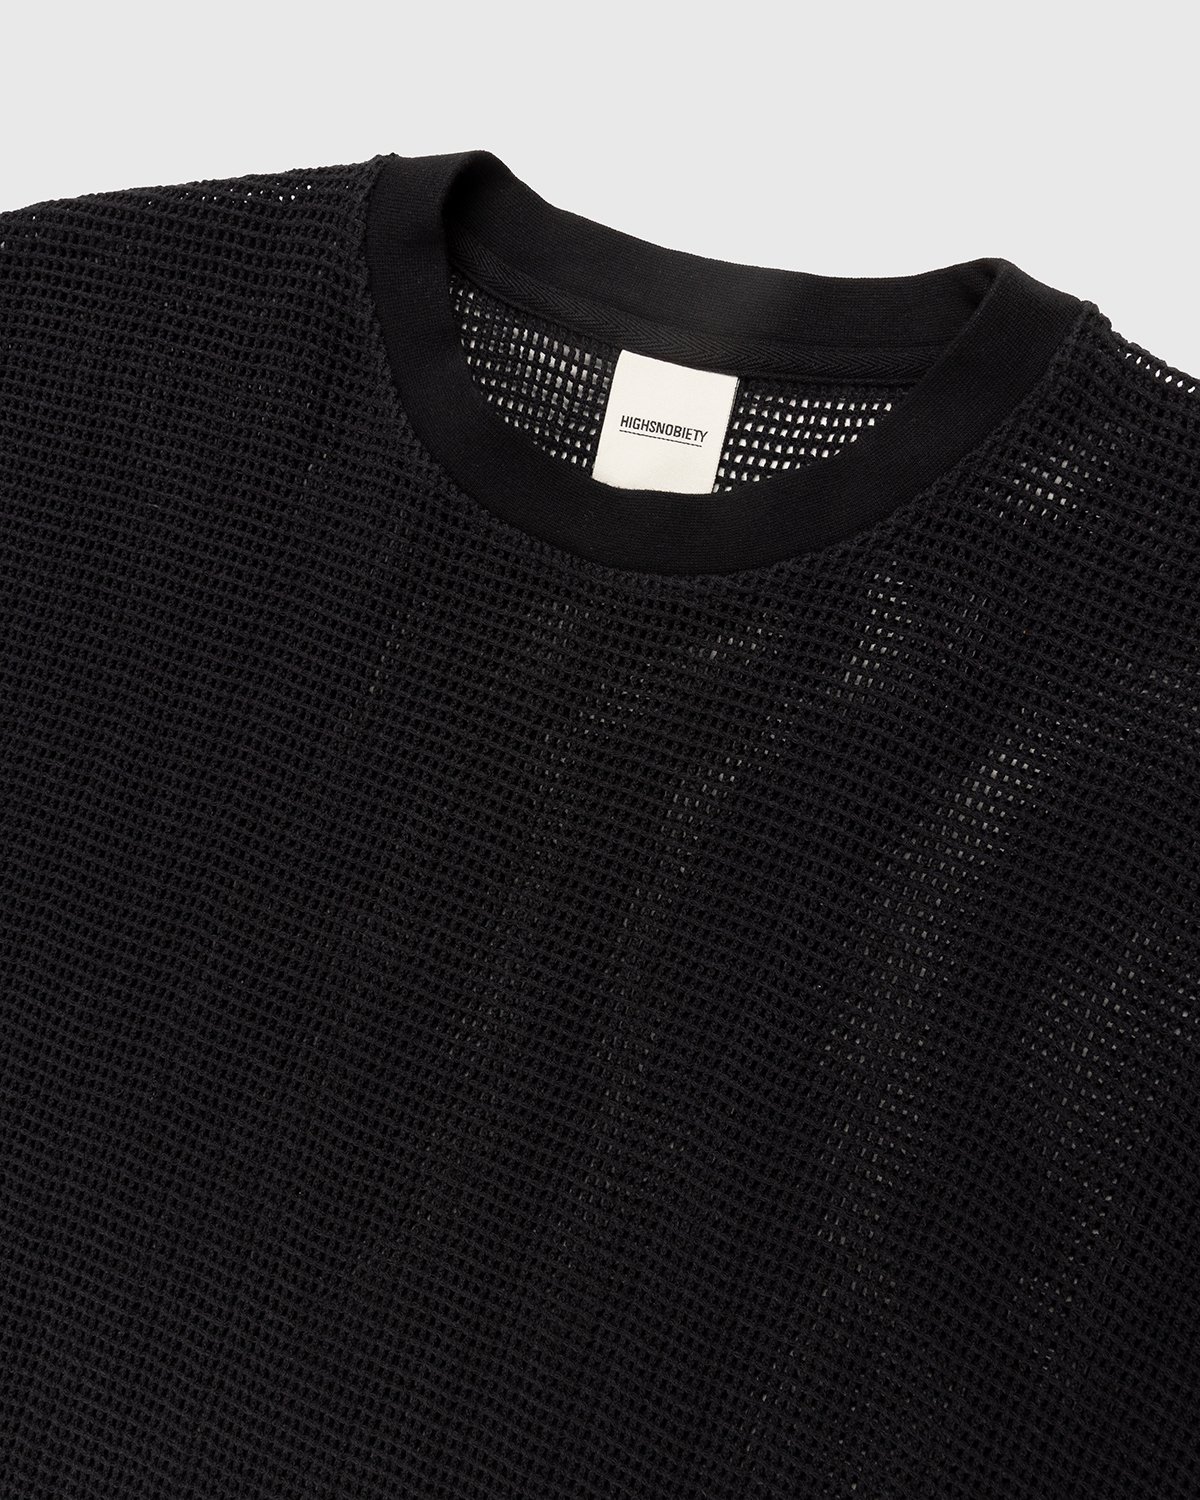 Highsnobiety - Knit Mesh Jersey T-Shirt Black - Clothing - Black - Image 4